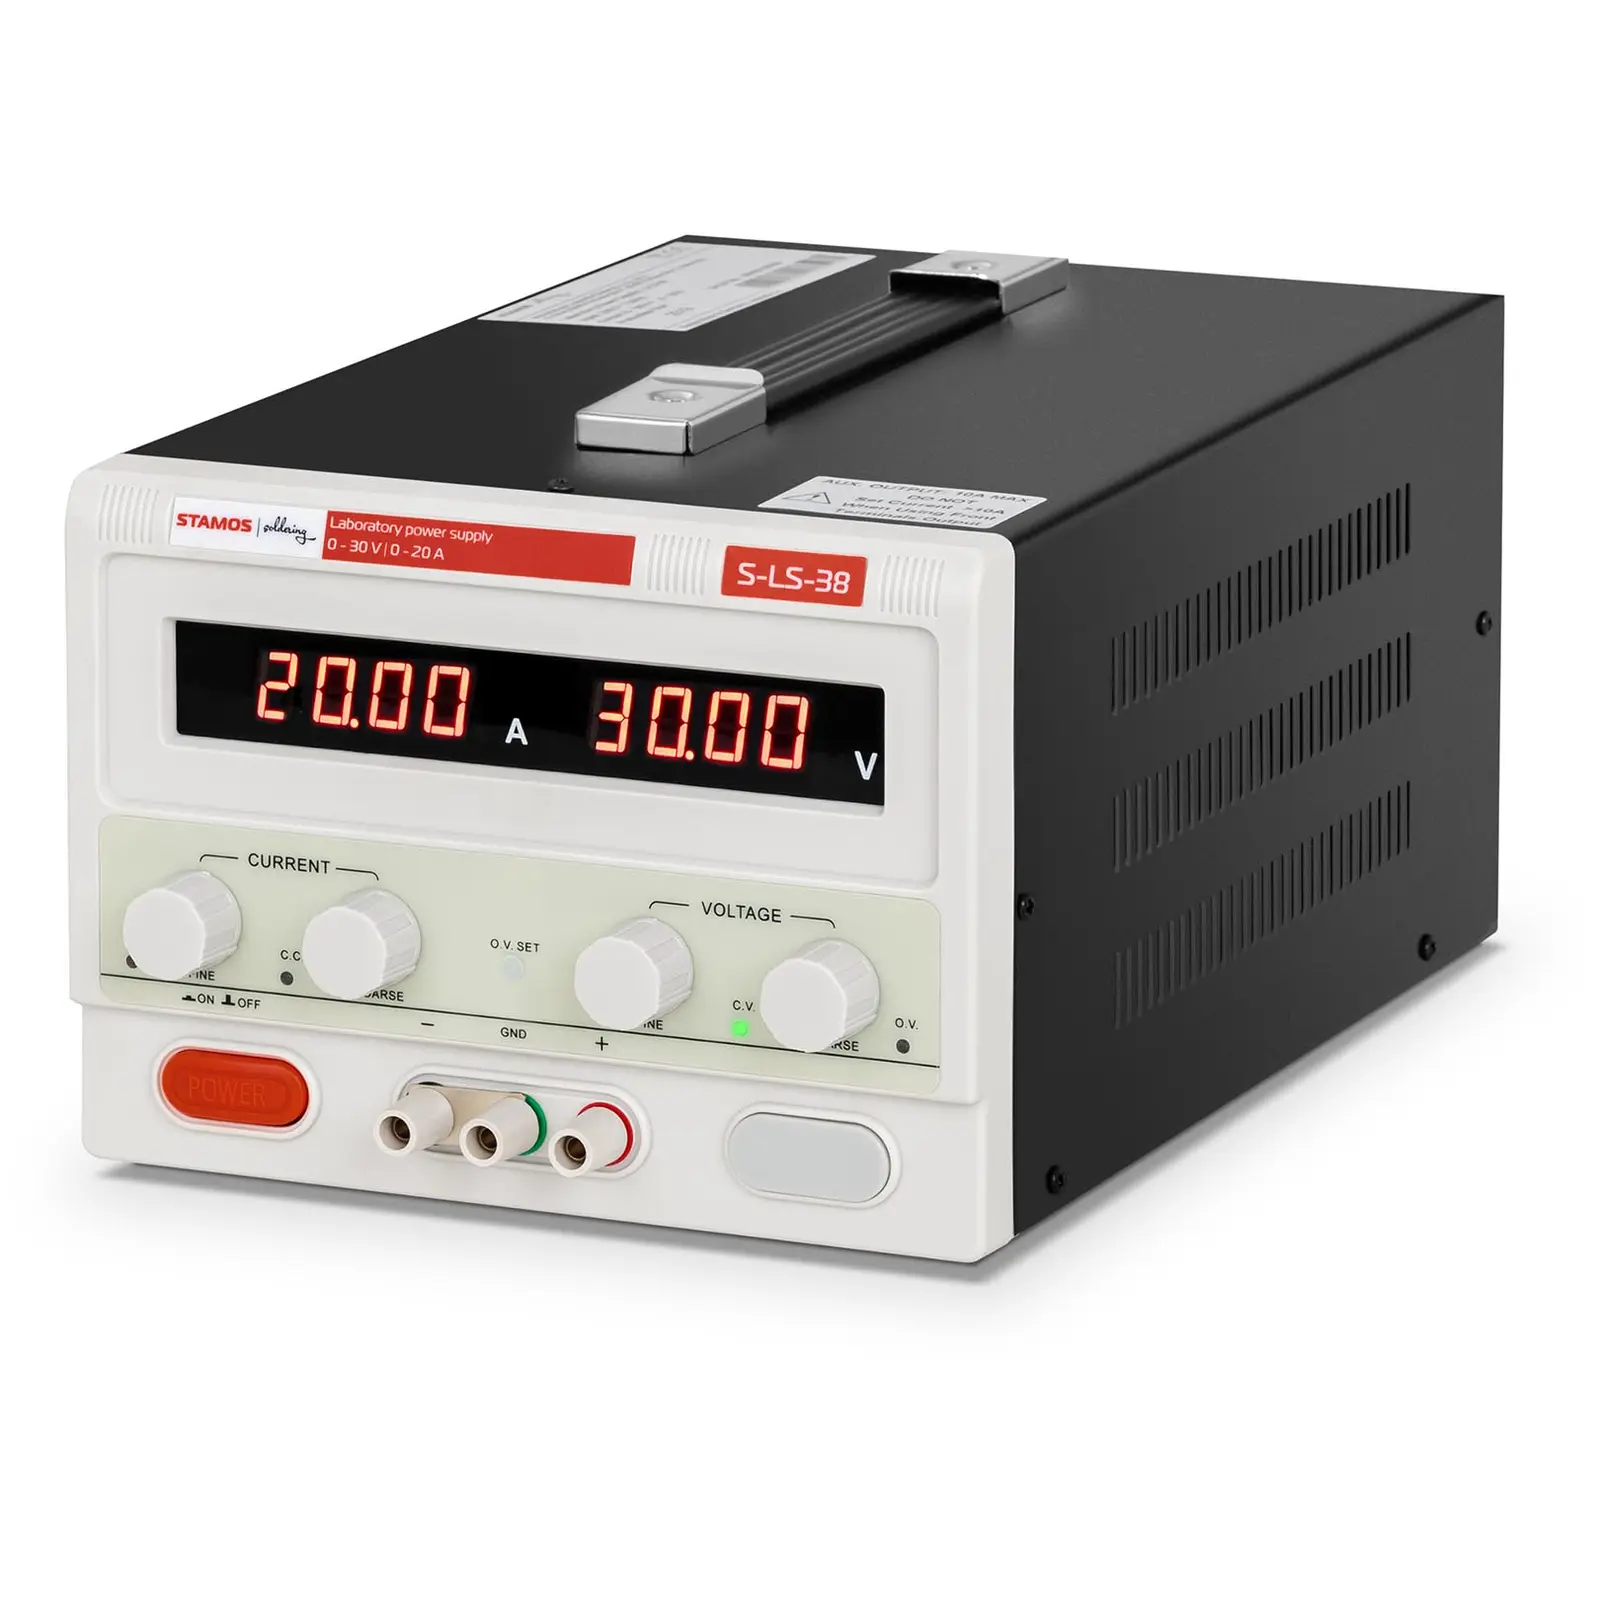 stamos soldering laboratory power supply - 0-30 v - 0-20 a dc - 600 w, oro, uomo